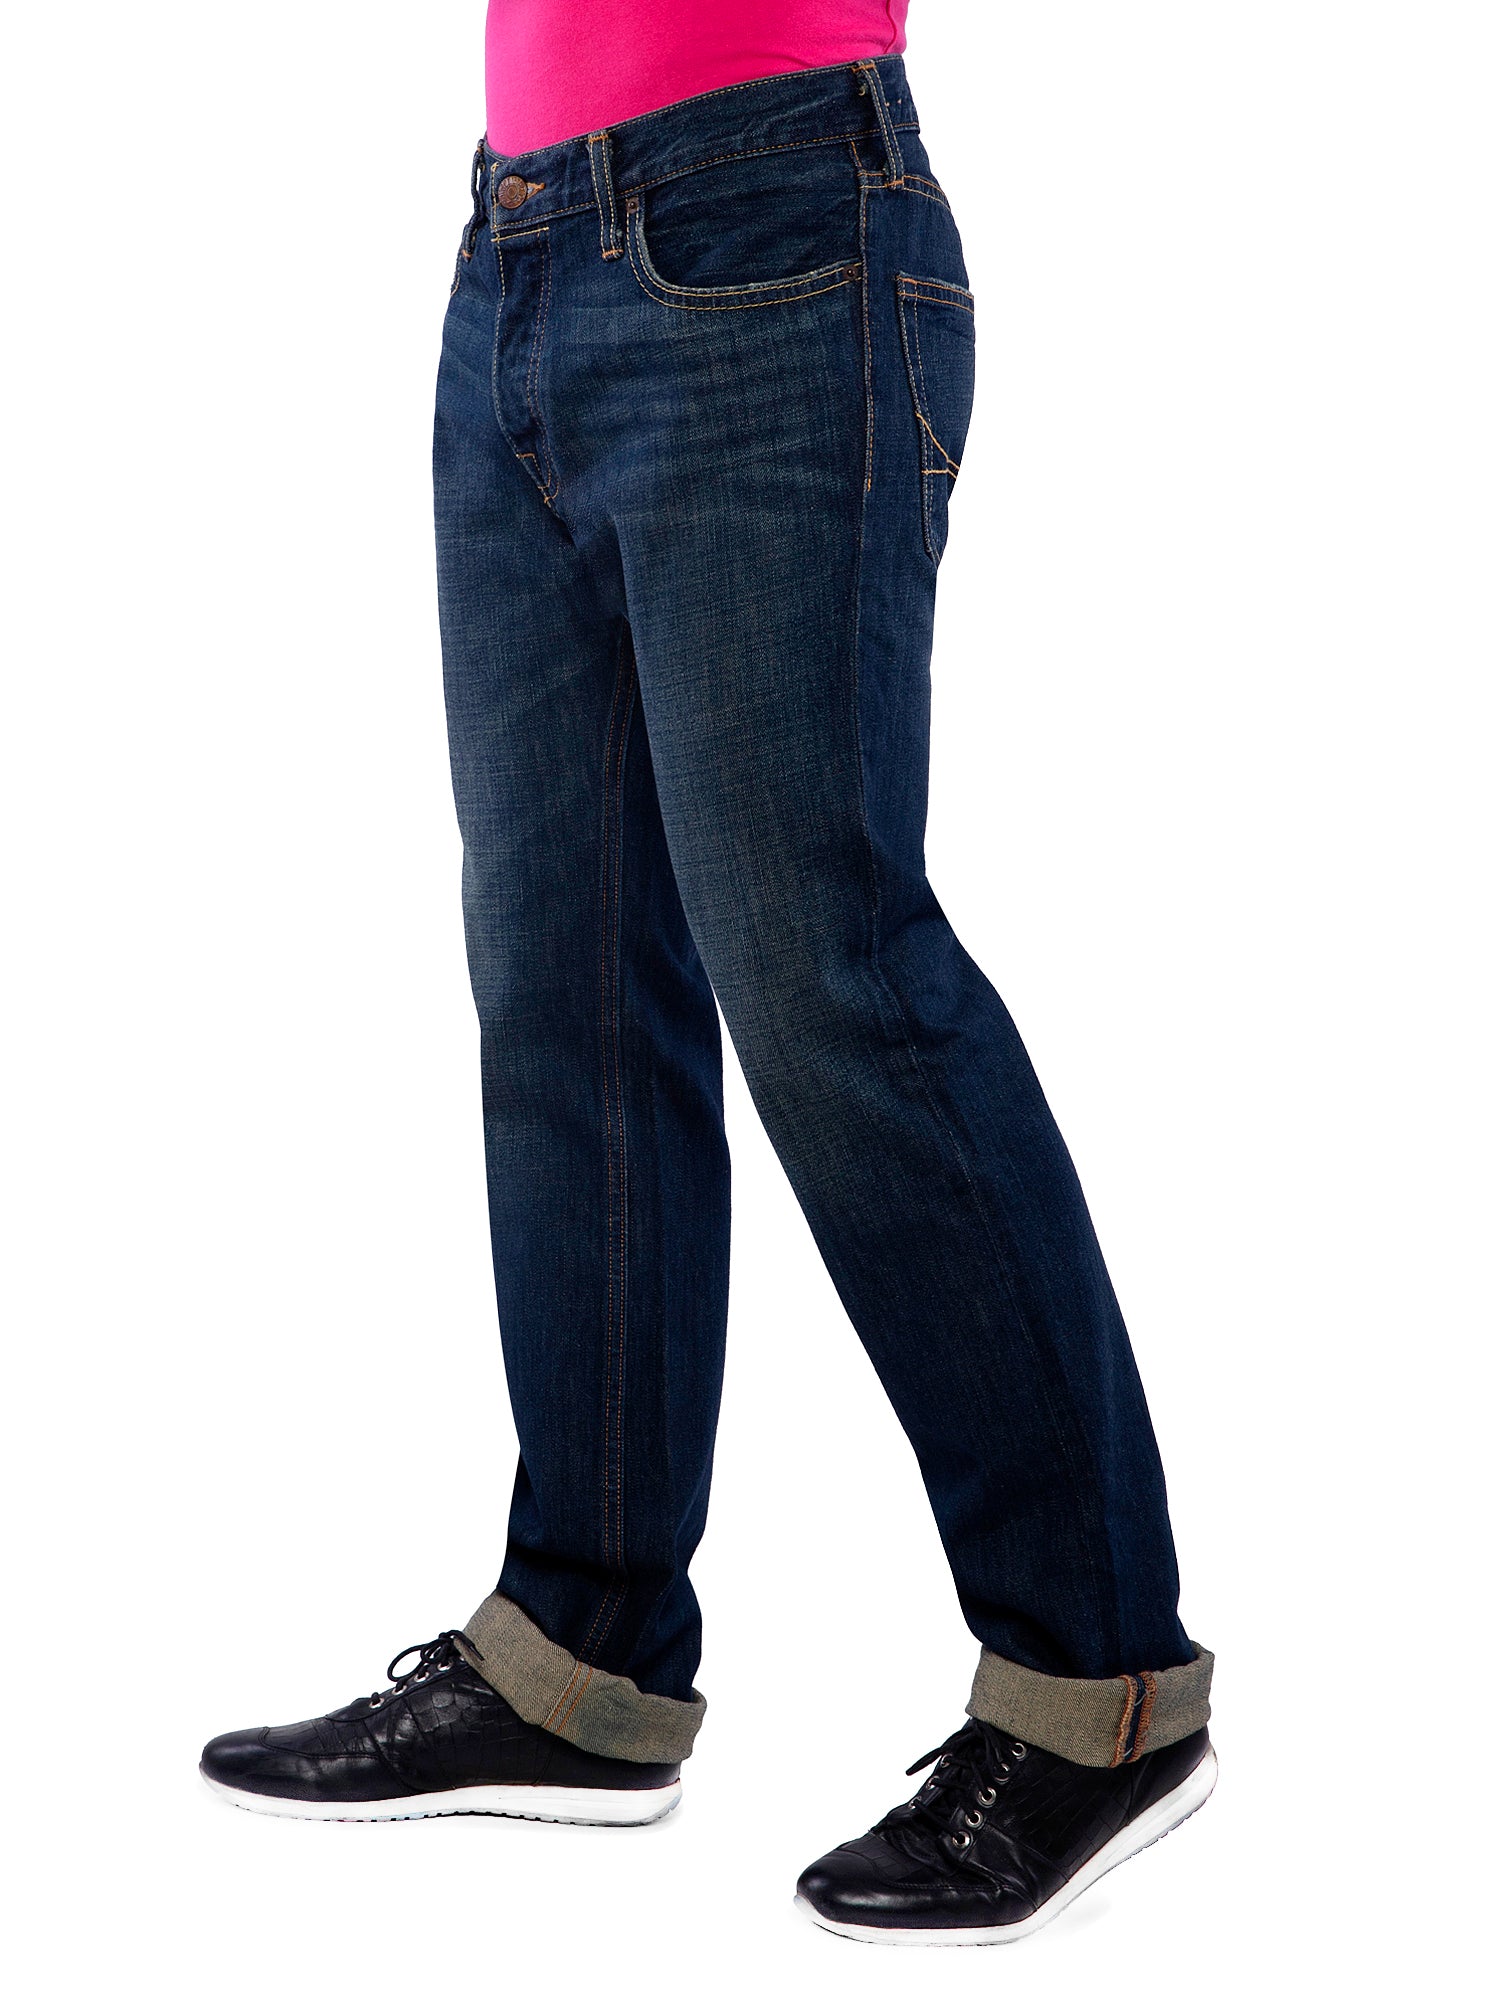 hollister jeans slim fit